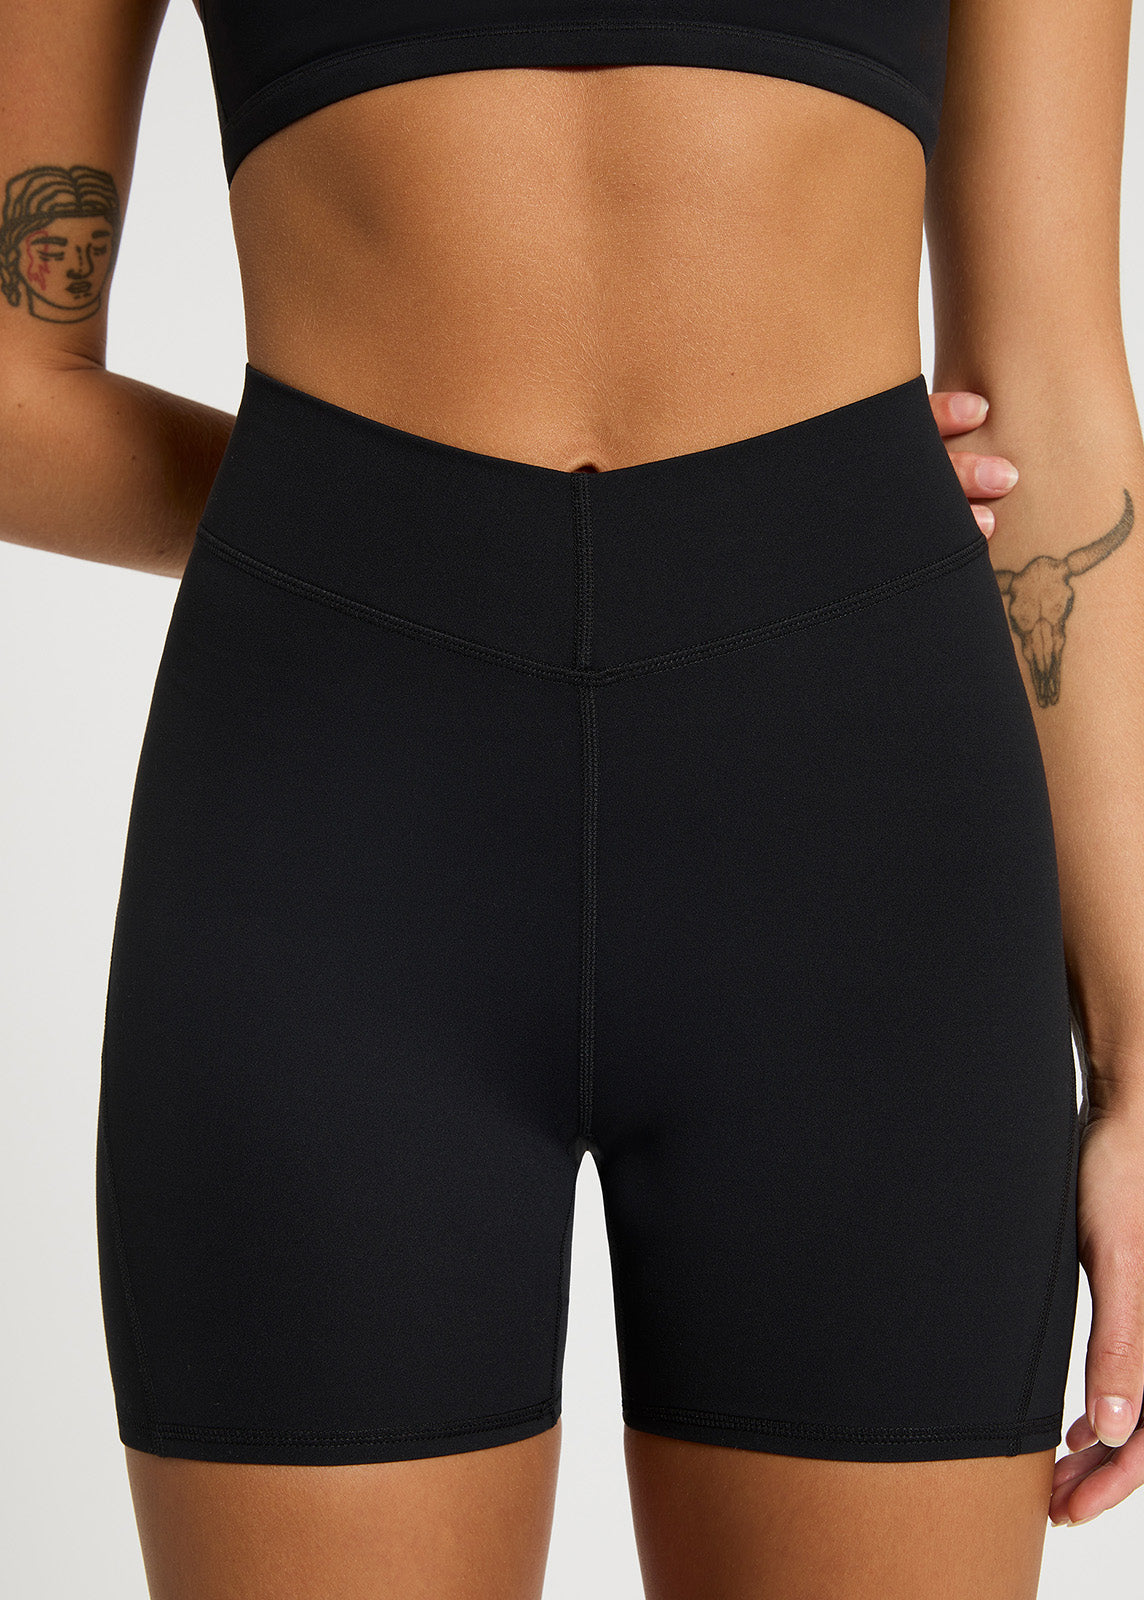 Ipletix Biker Shorts for Women, 6 High Waist Biker Shorts Black Workout  Shorts for Running Yoga Athletic at  Women's Clothing store